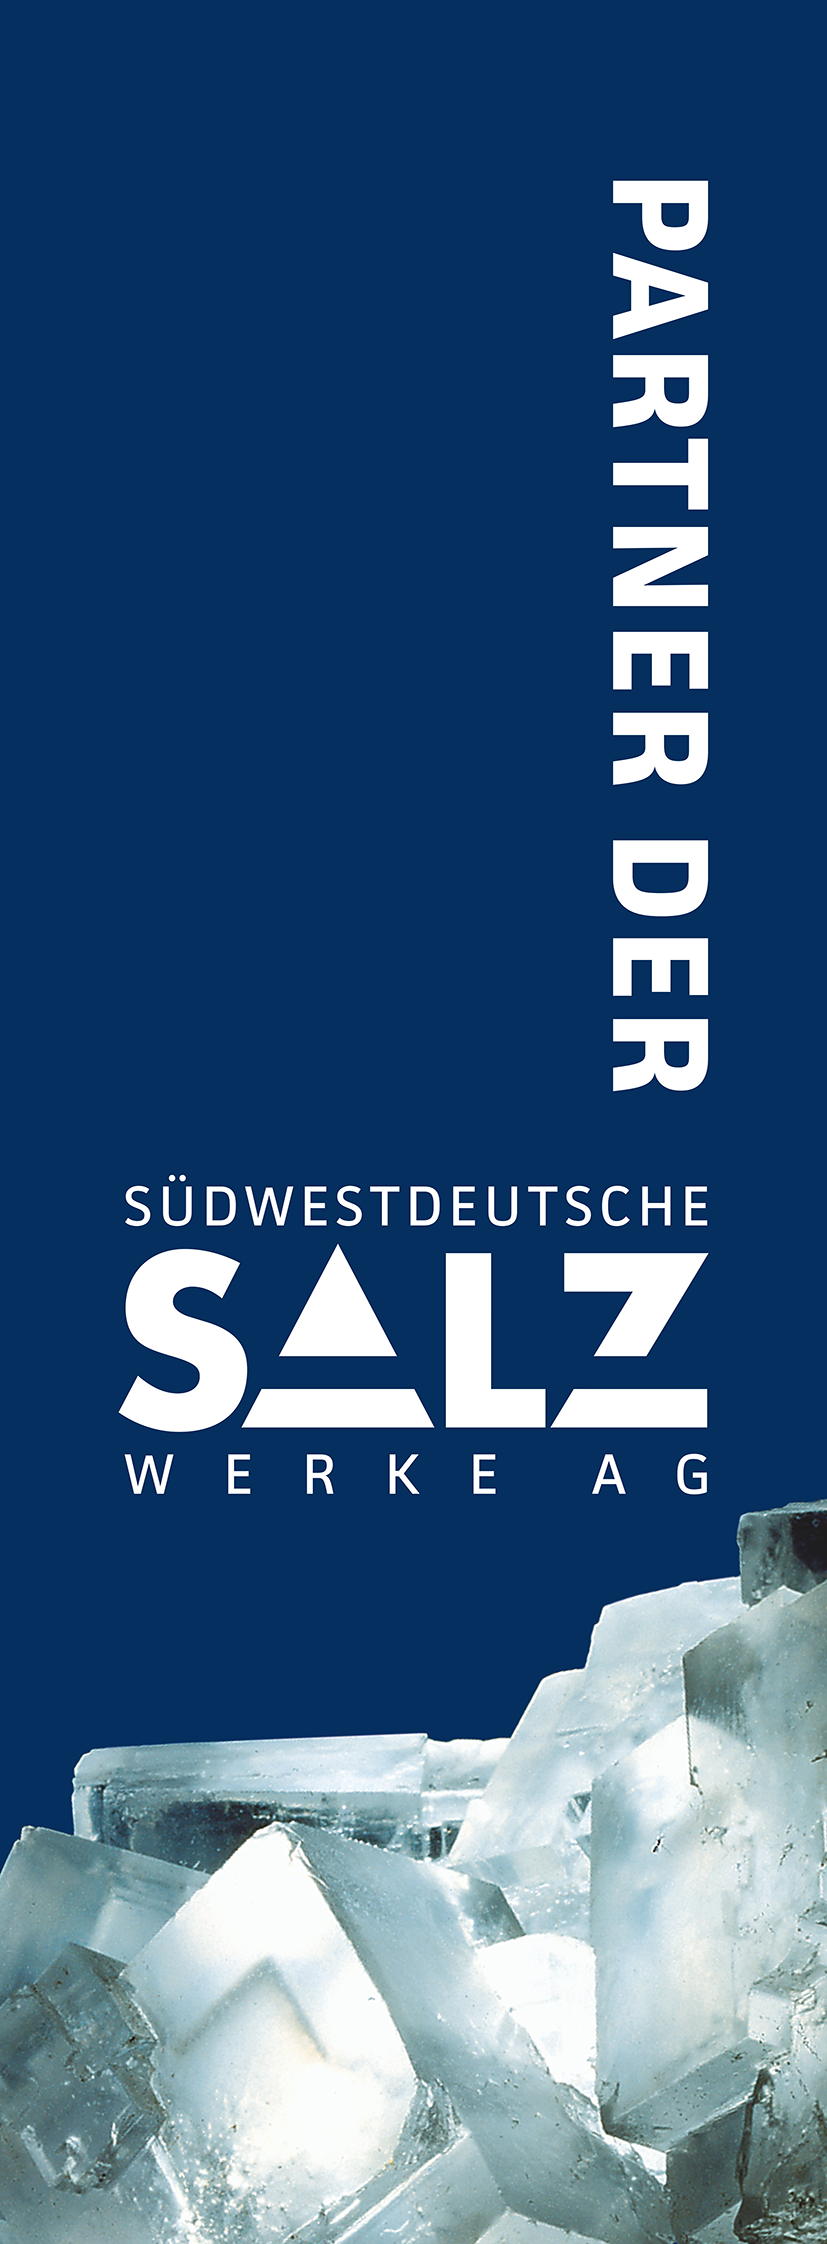 Die Südwestdeutsche Salzwerke AG